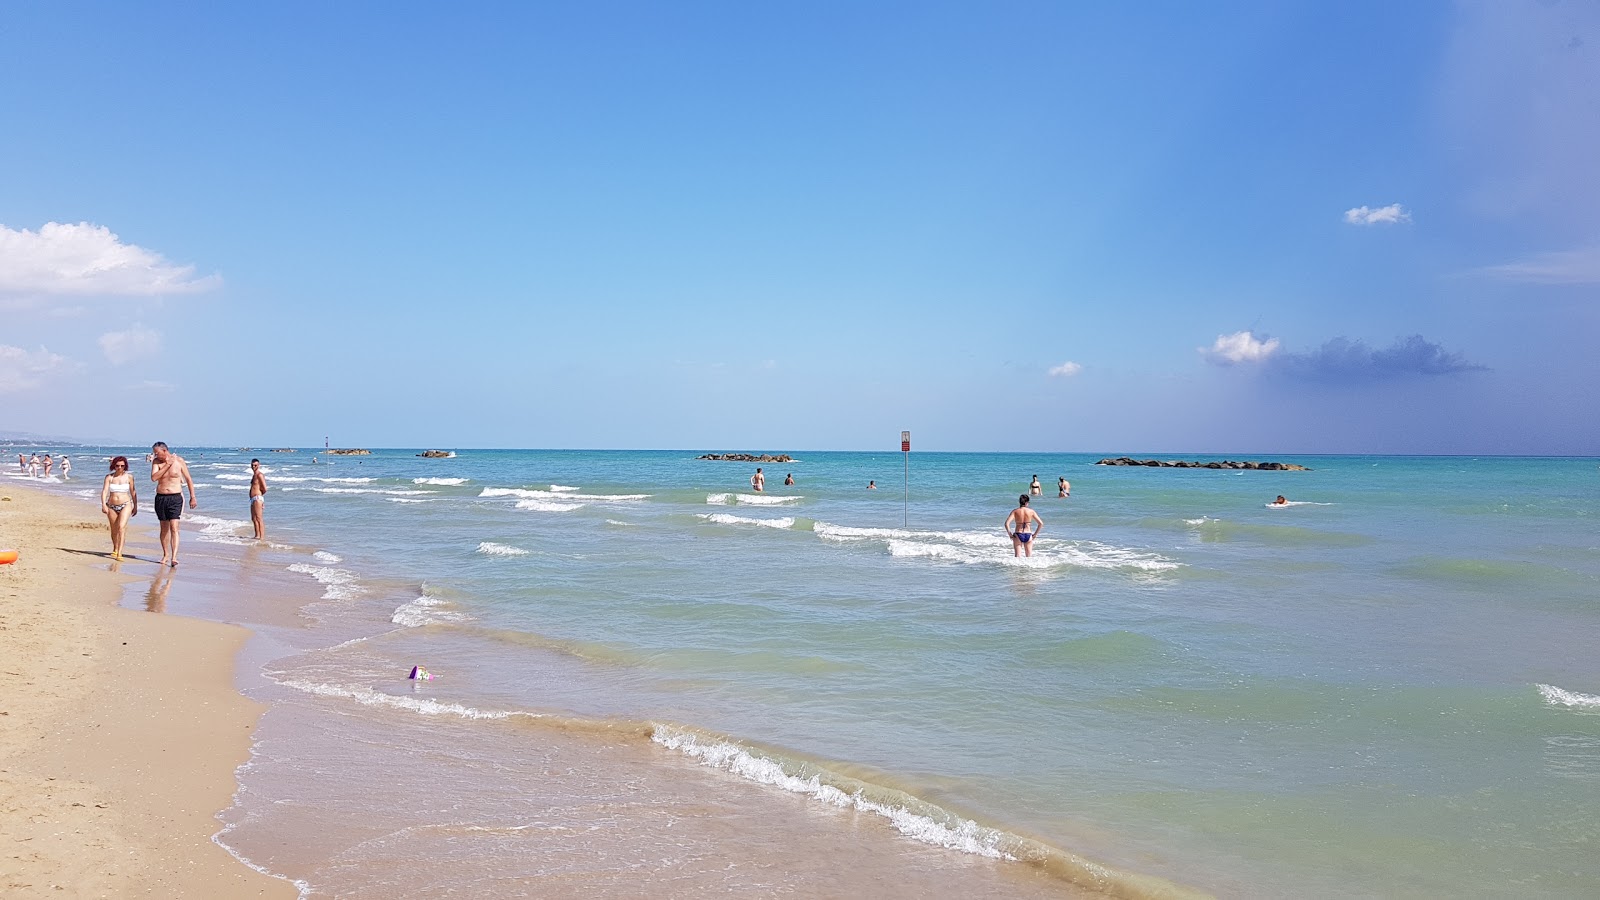 Foto van Spiaggia di Roseto Degli Abruzzi met recht en lang